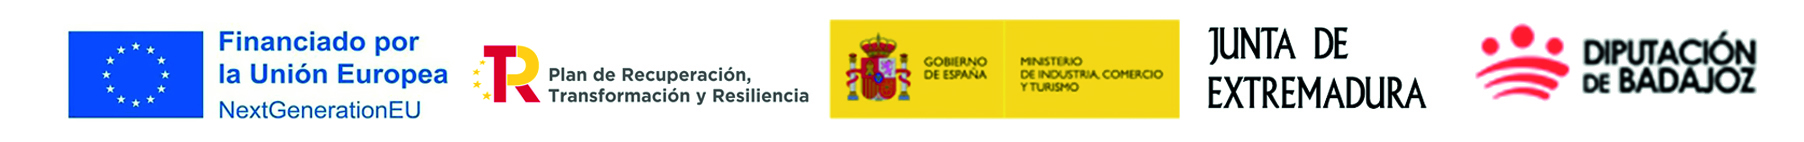 NEXTGENERATION EU - PLAN DE RECUPERACION - GOBIERNO DE ESPAÑA - JUNTA DE EXTREMADURA - DIPUTACION DE BADAJOZ